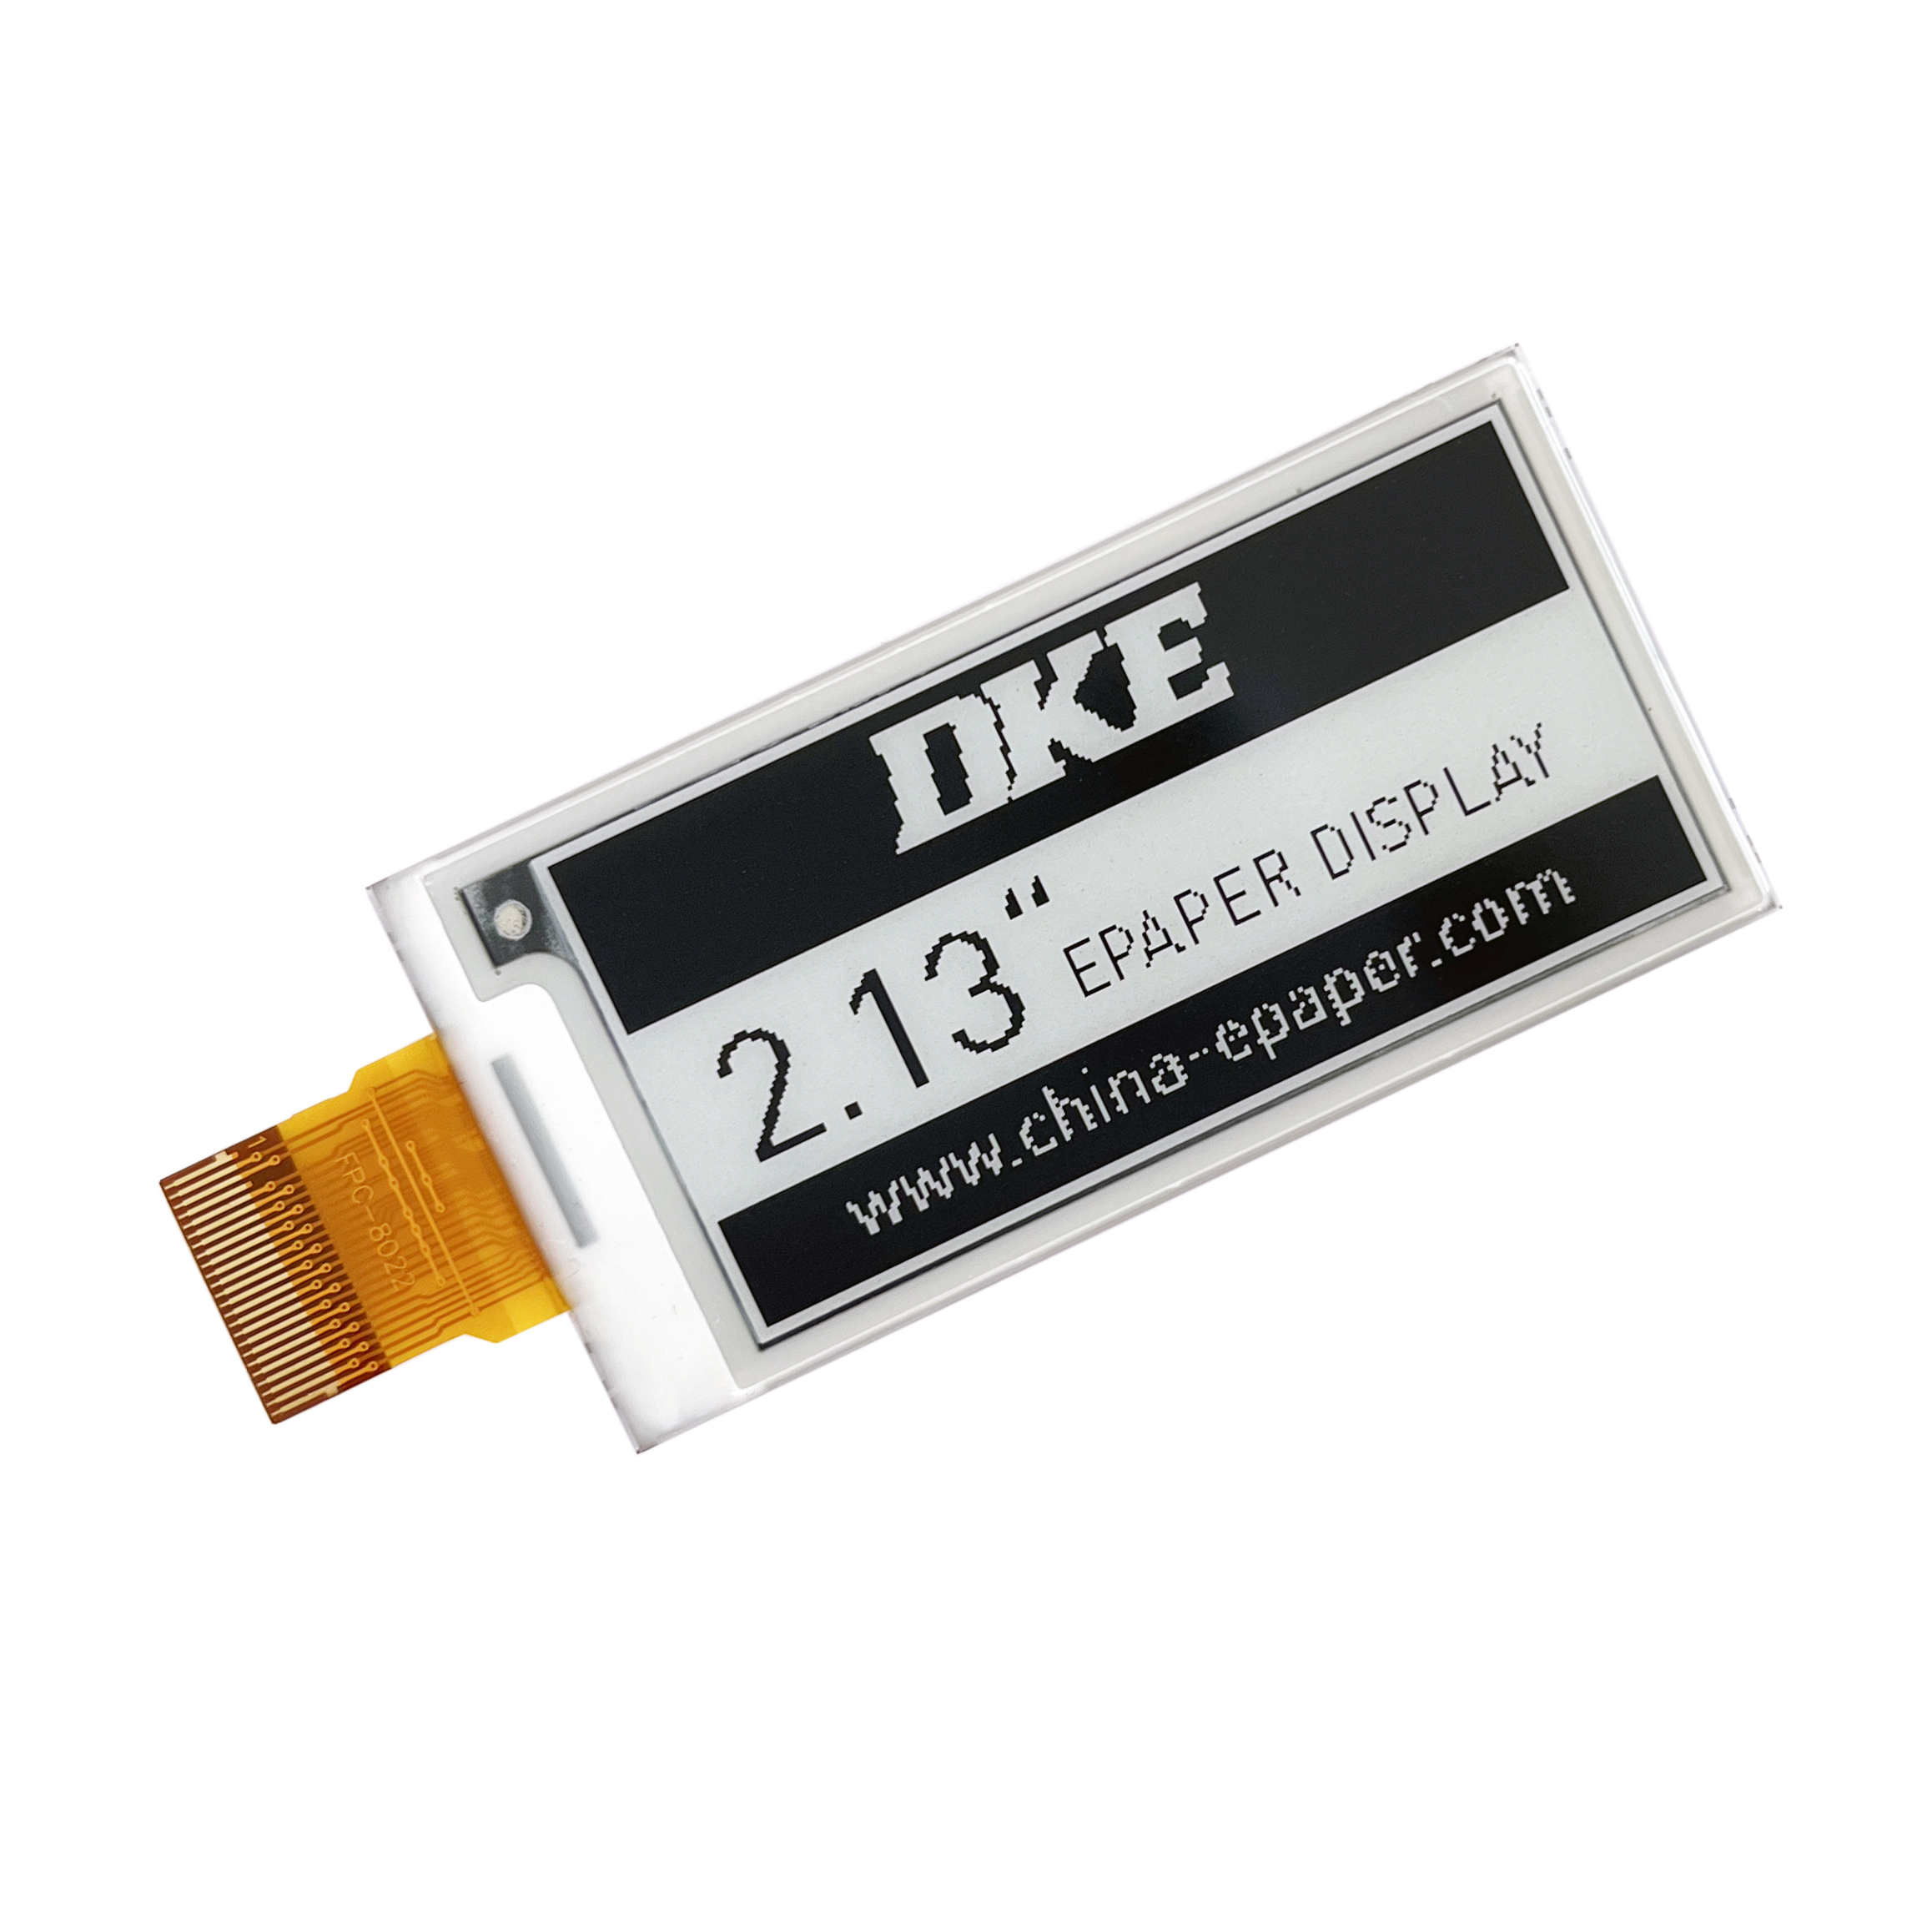 DKE 2.13 Inch Epaper Display